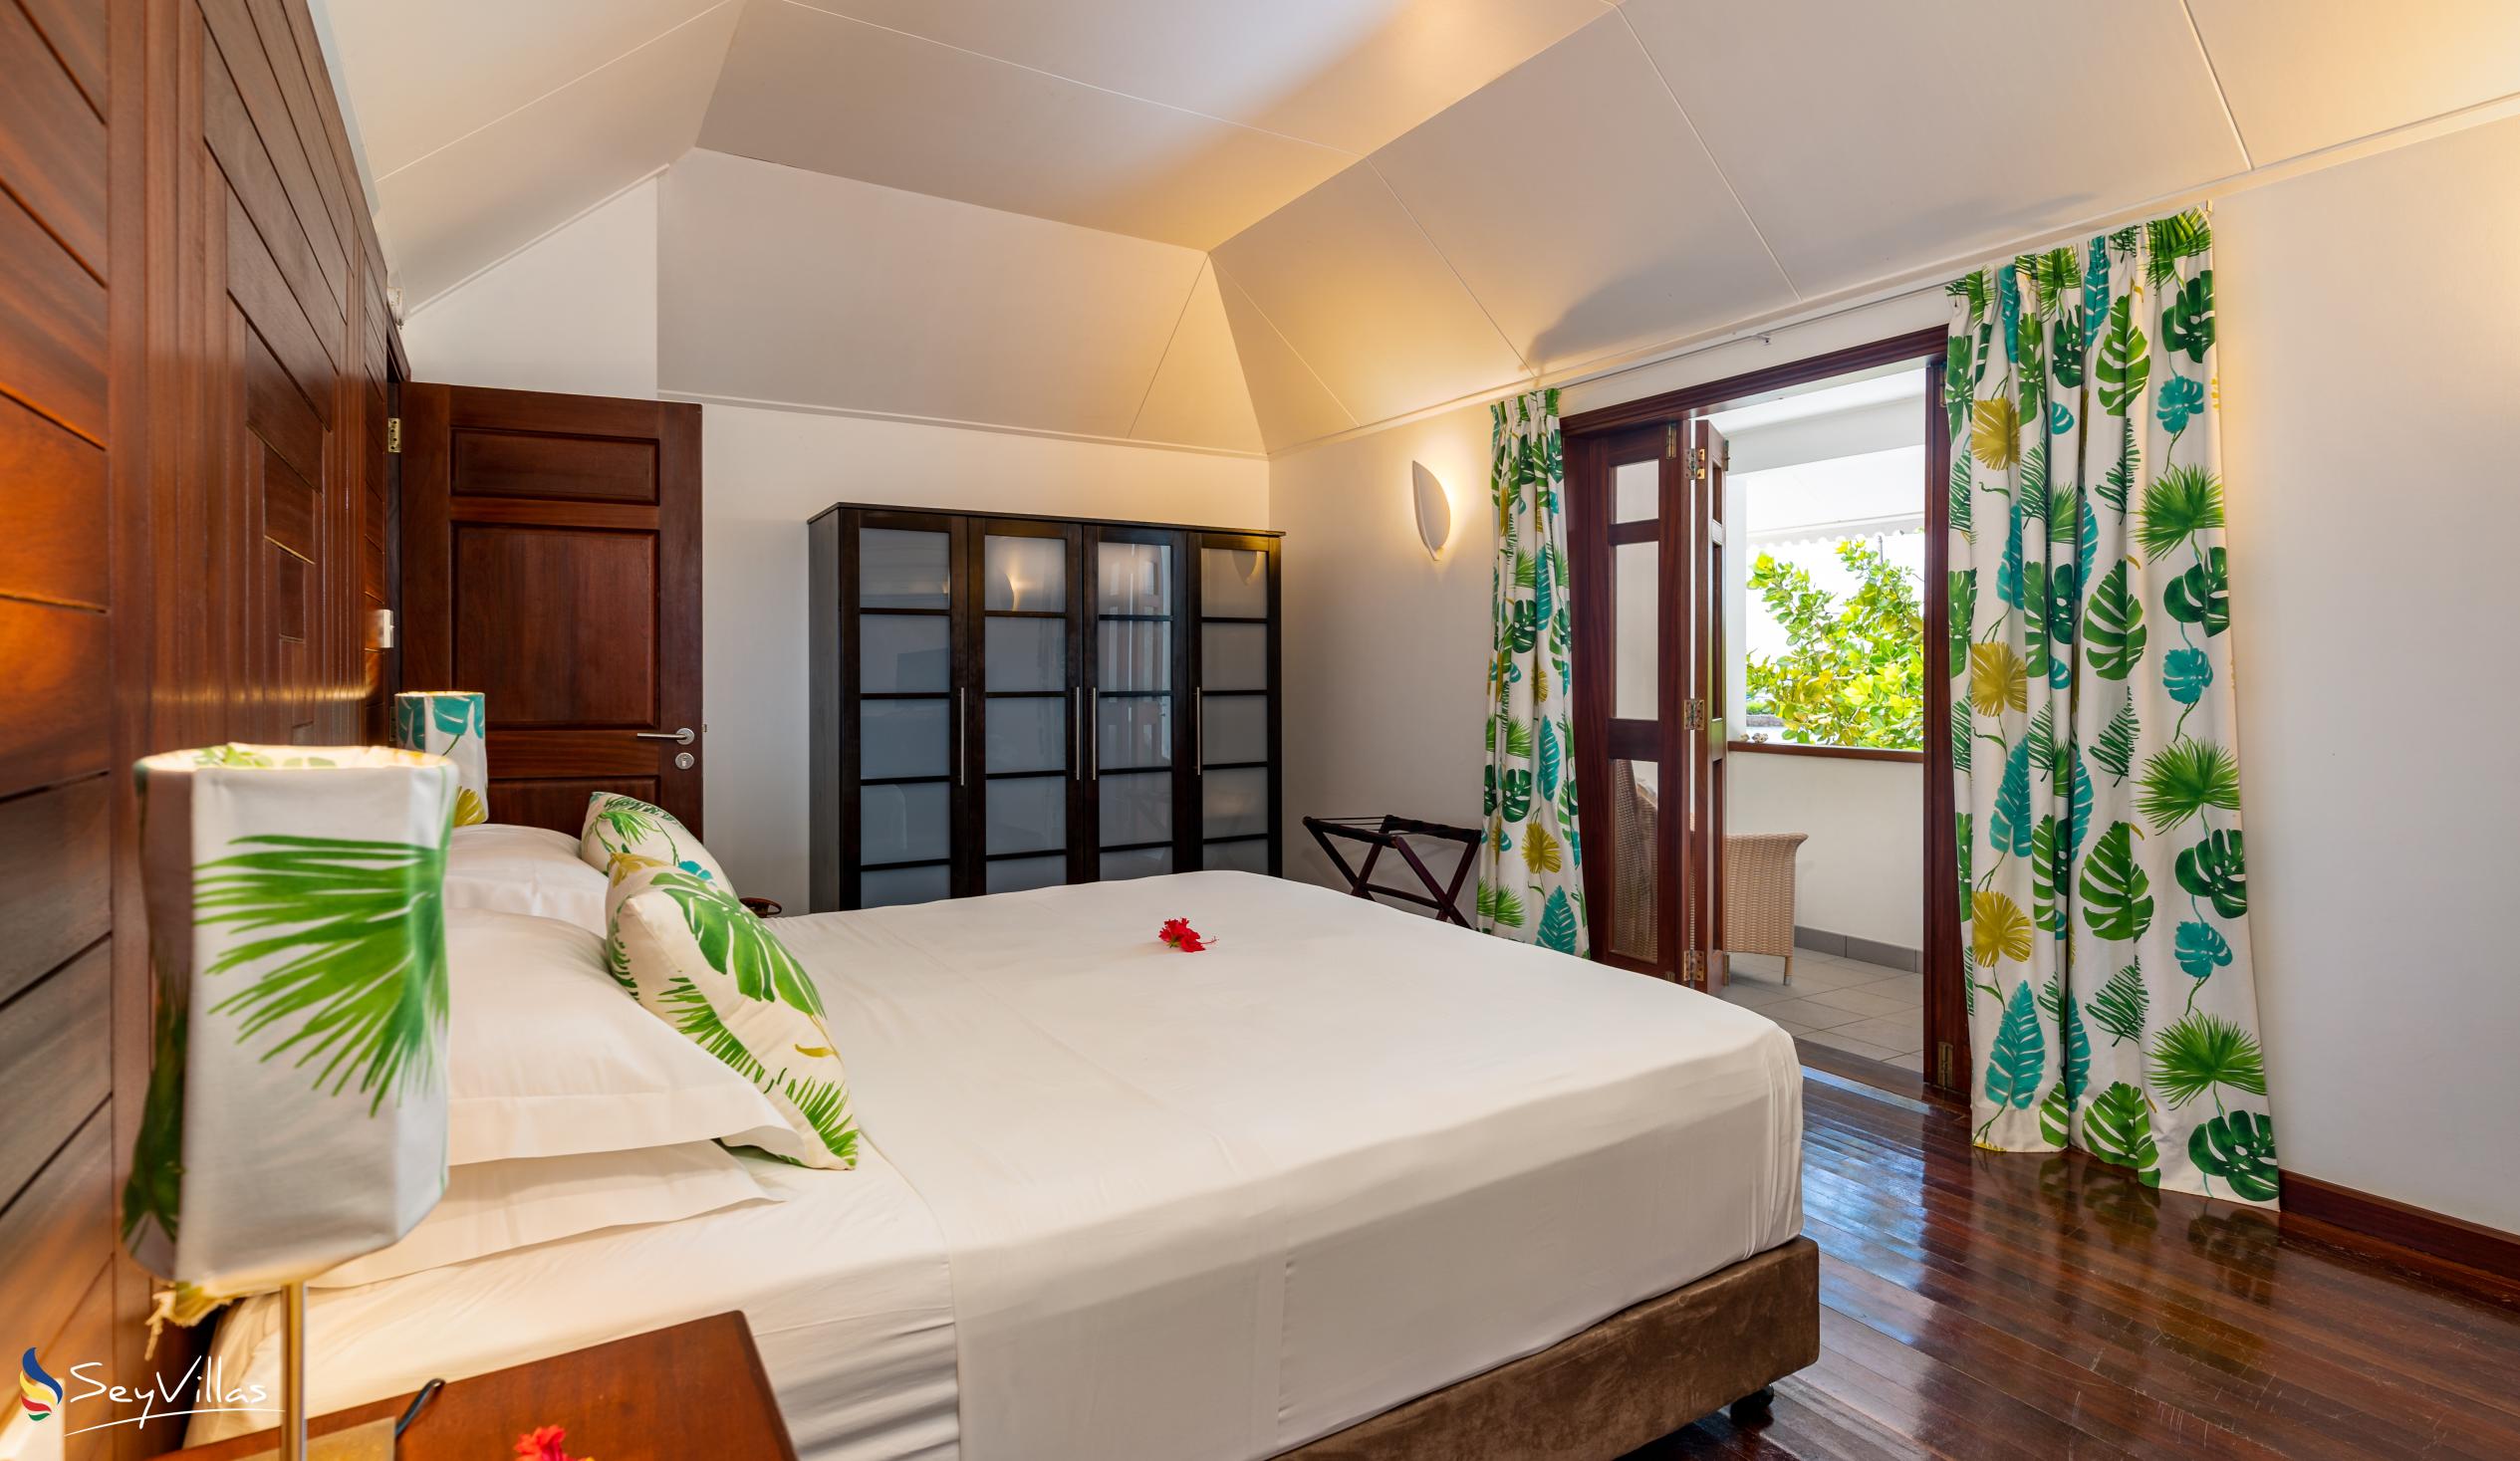 Photo 93: La Belle Tortue - Lodge Room with Balcony - Silhouette Island (Seychelles)